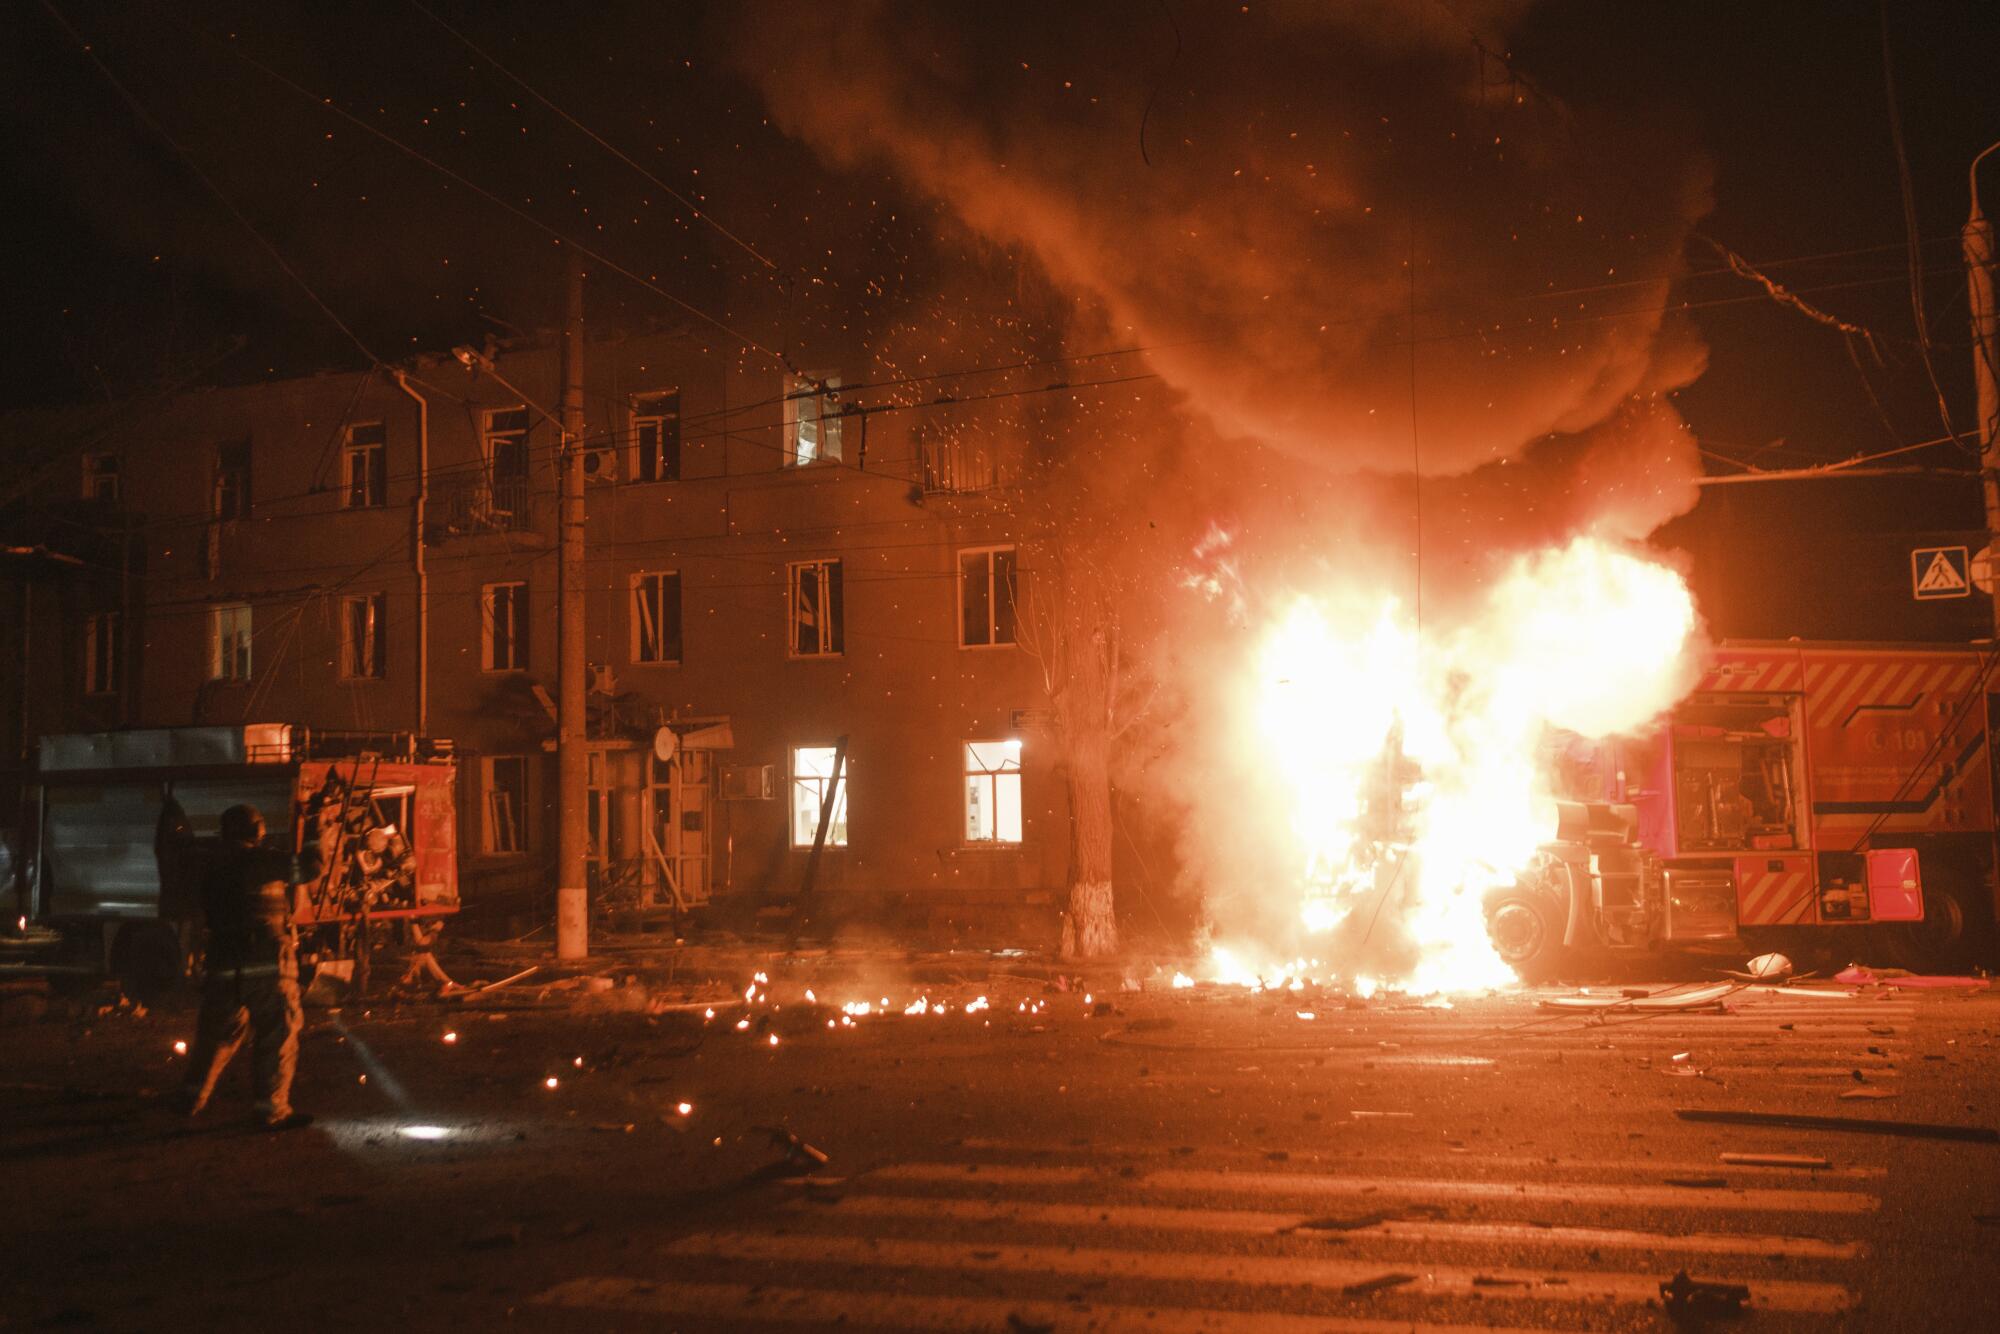 A fireball erupts near buildings at night